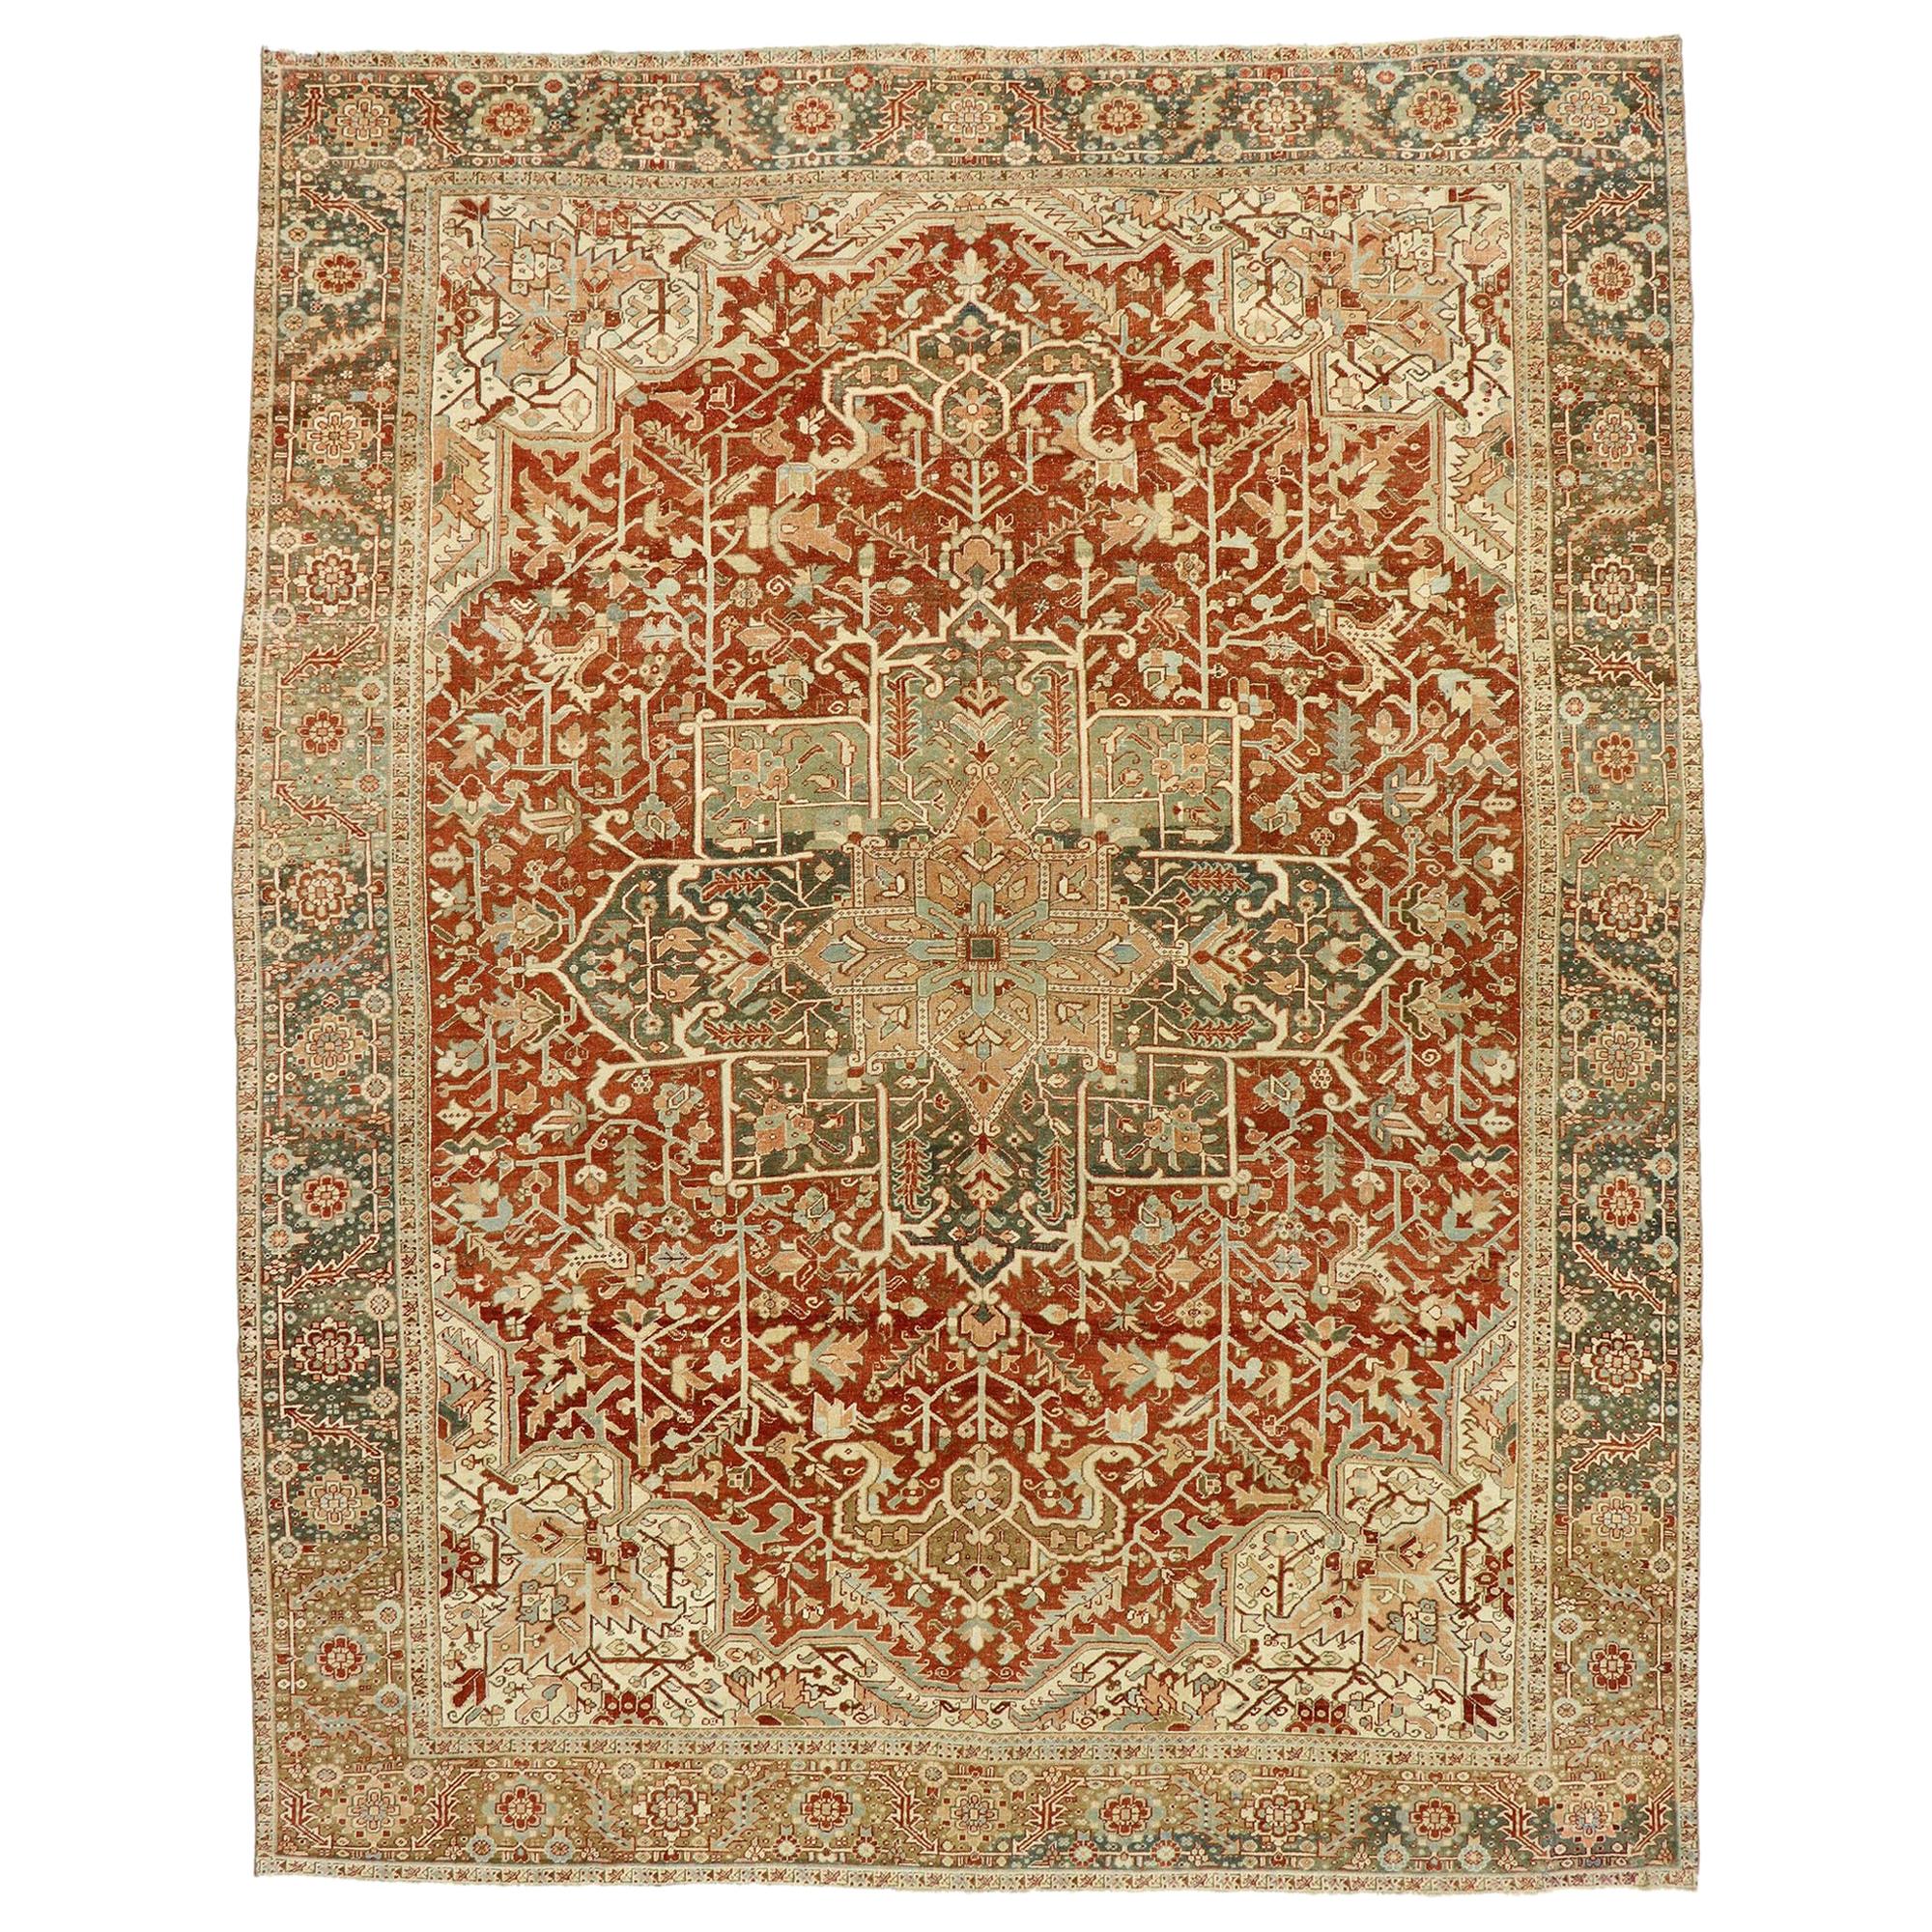 Antiker persischer Heriz-Teppich im Distressed-Stil mit modernem, rustikalem Bungalow-Stil